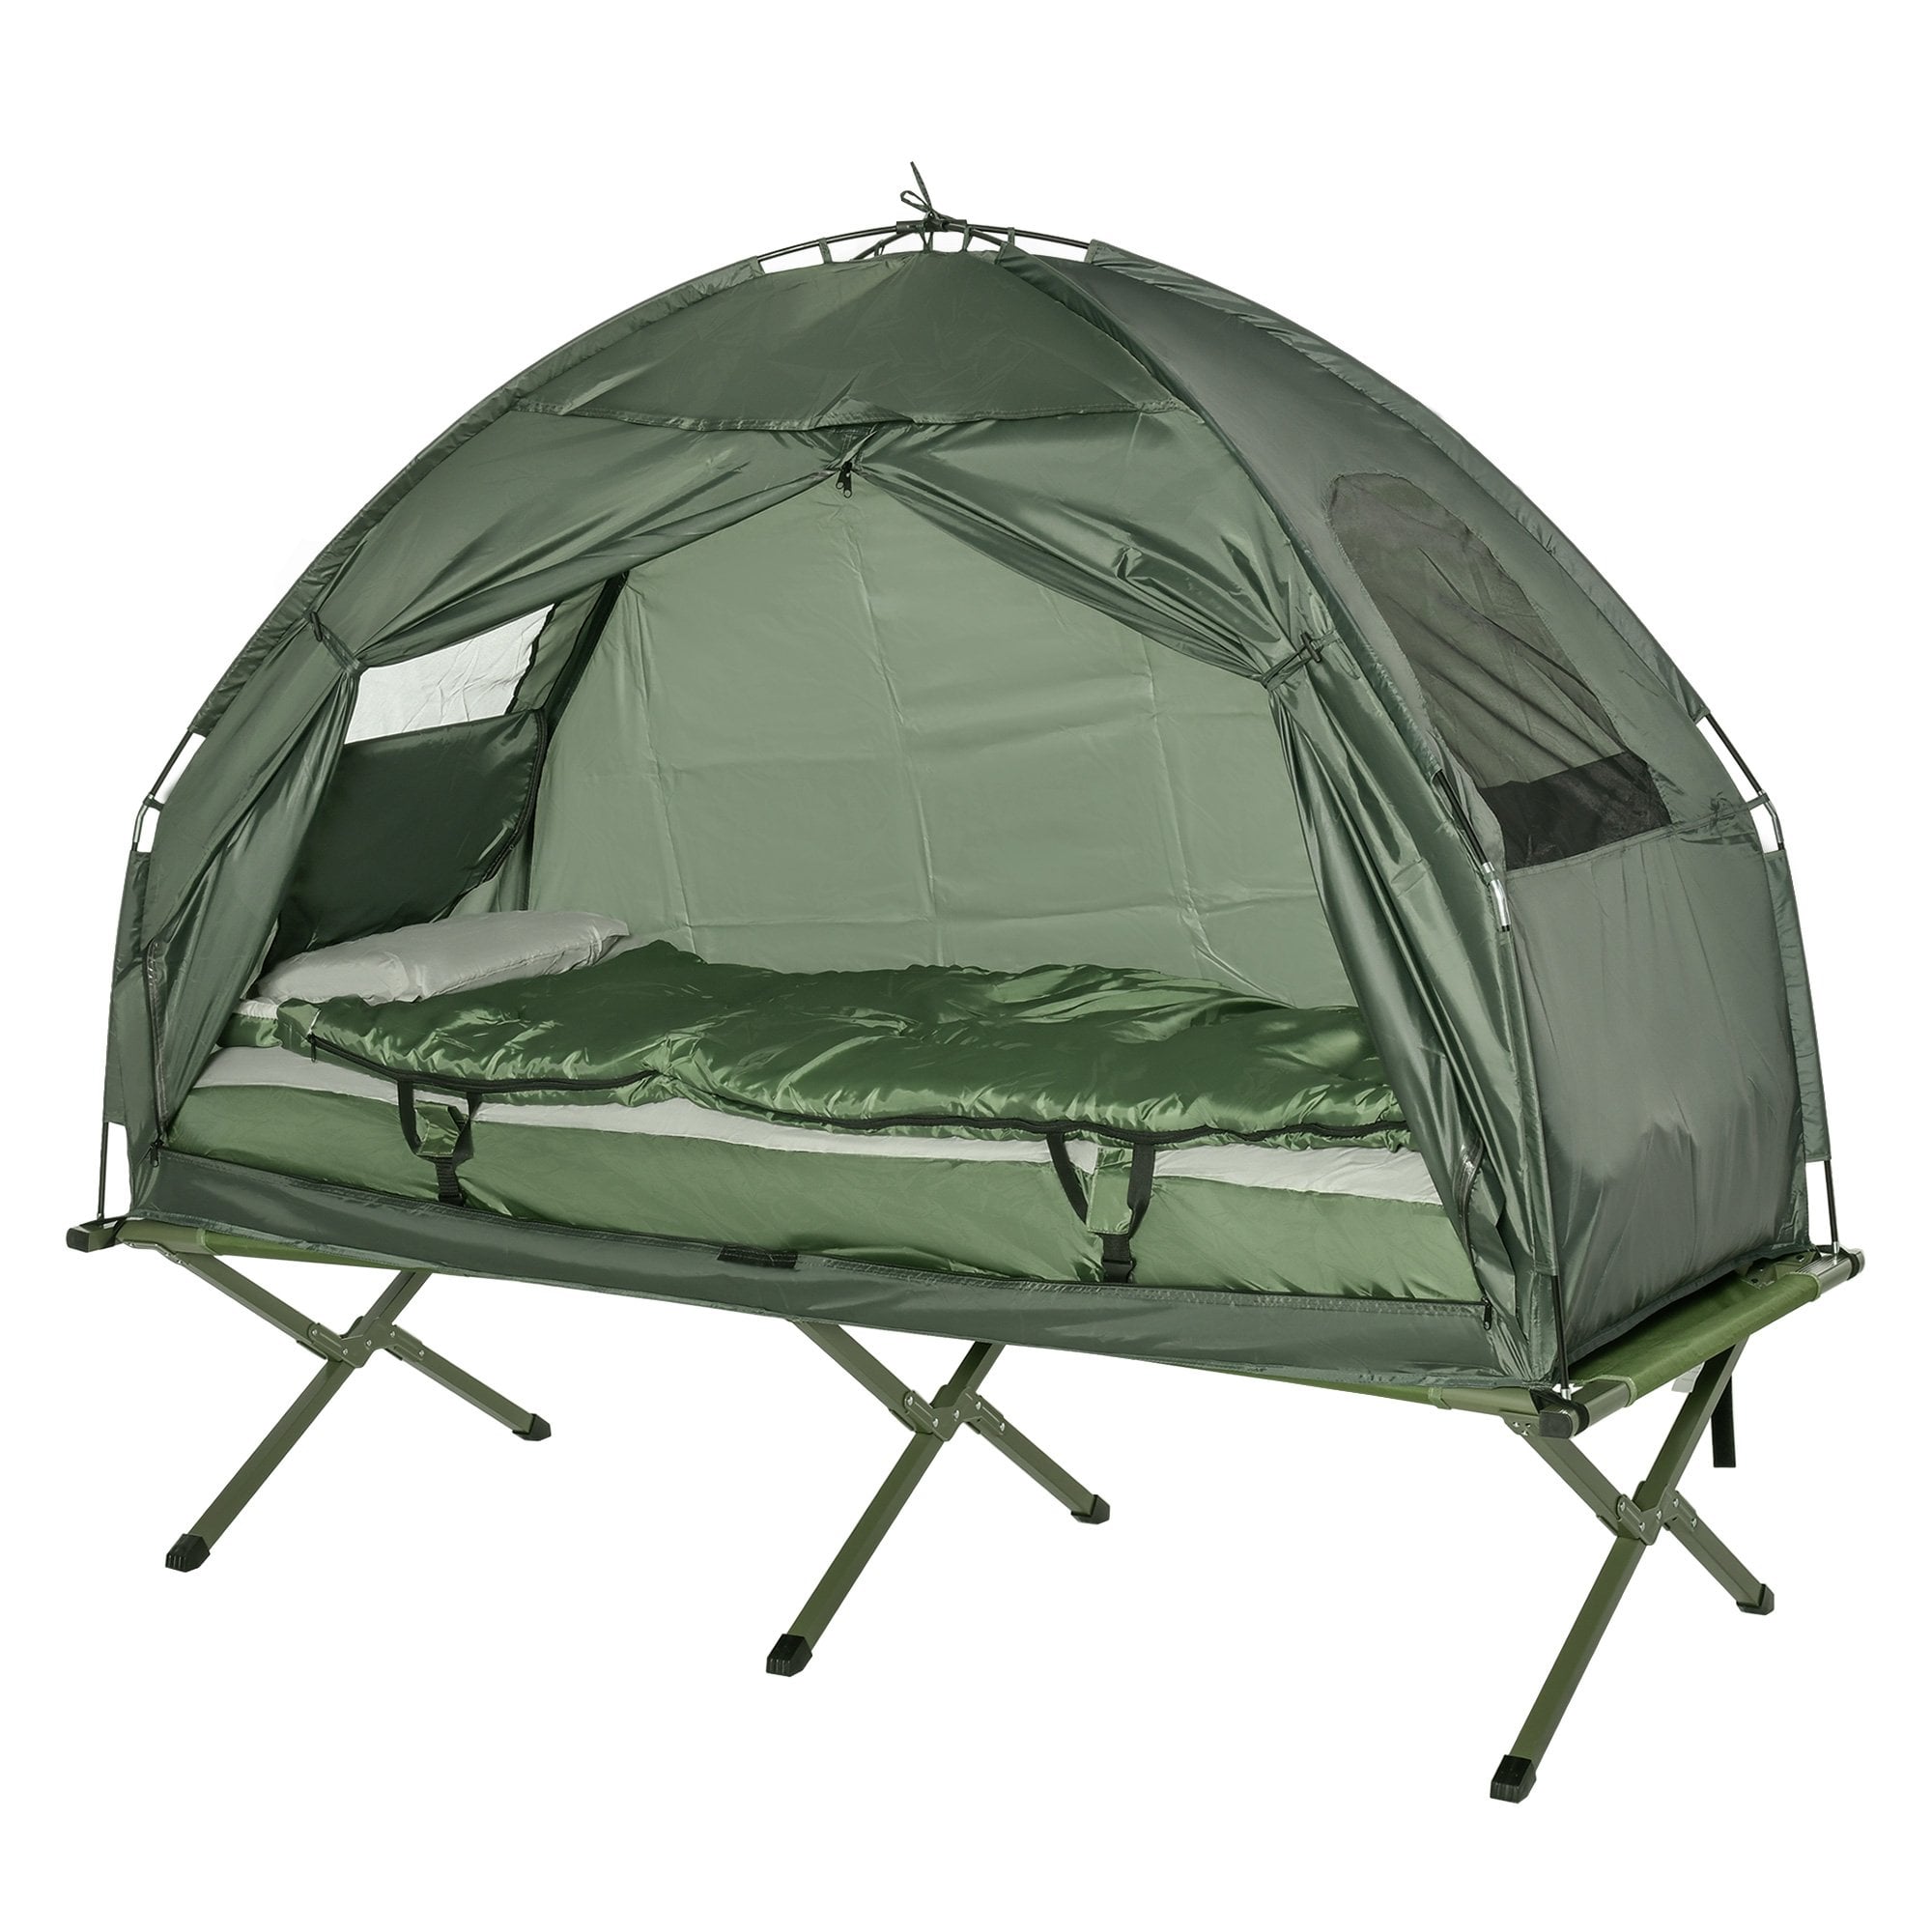 Outsunny Sleeping Bag Tent 1 person Foldable Camping Air Mattress Outdoor Hiking Picnic Bed cot Foot Pump Camp Army Green  | TJ Hughes